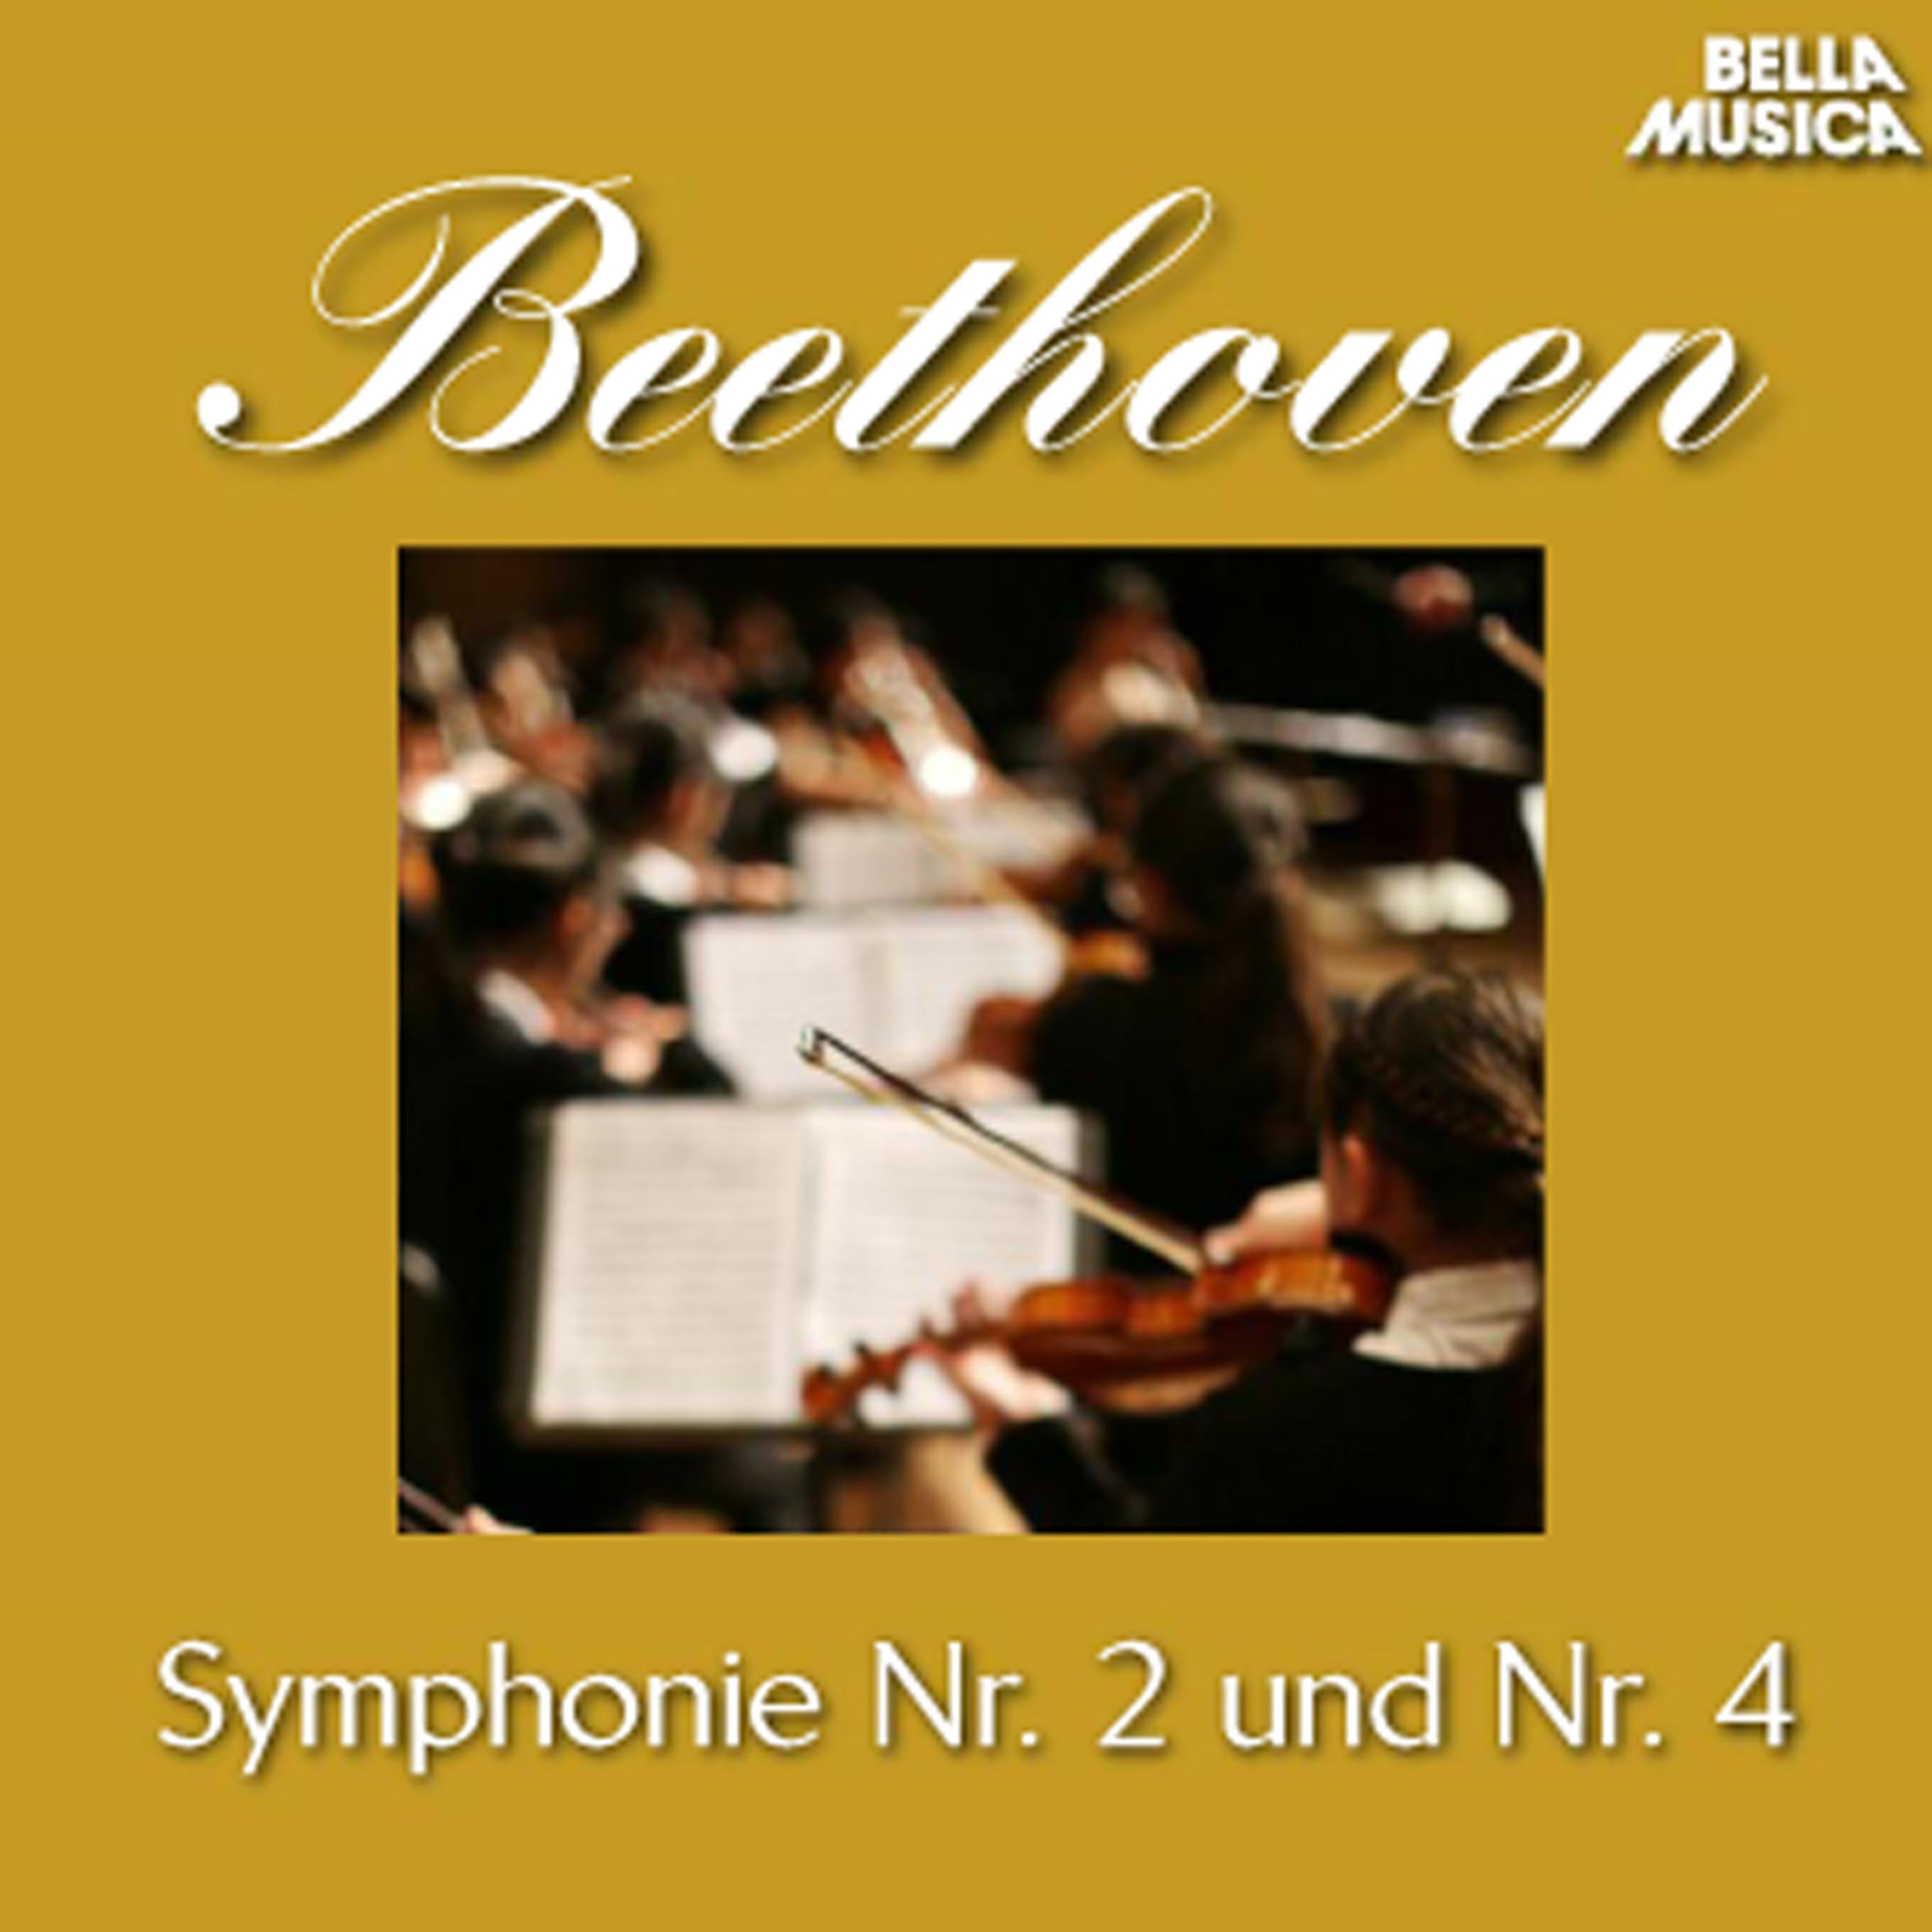 Sinfonie No. 2 fü r Orchester in D Major, Op. 36: I. Adagio molto  Allegro con brio